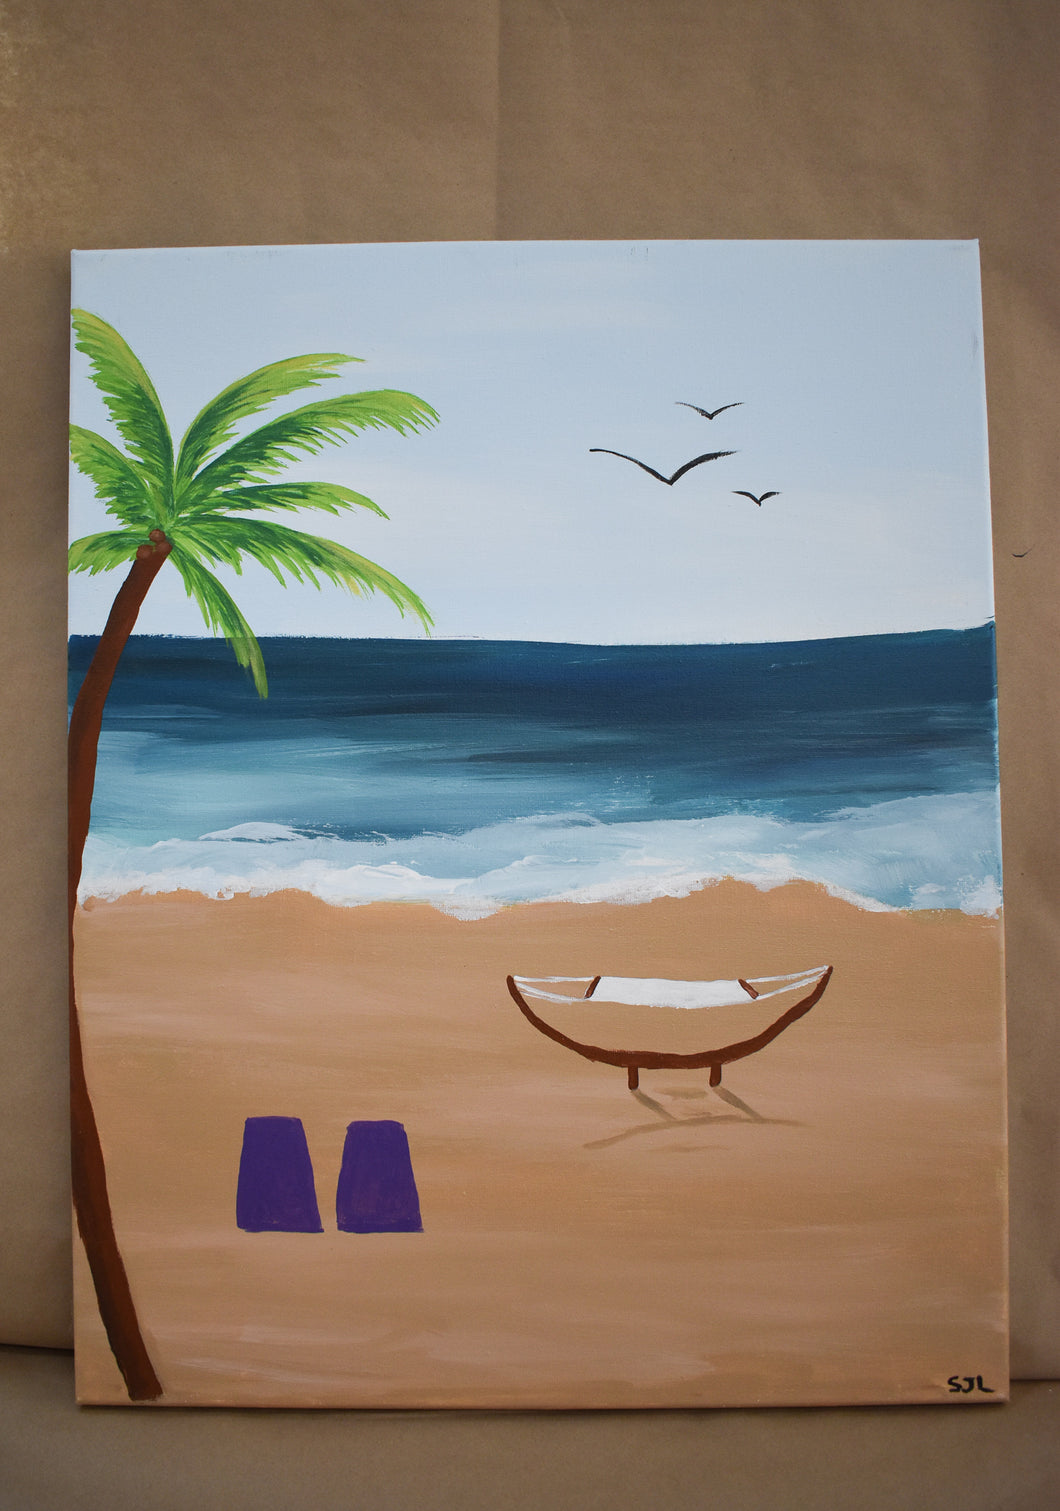 #38 Beach Scene Painted Canvas